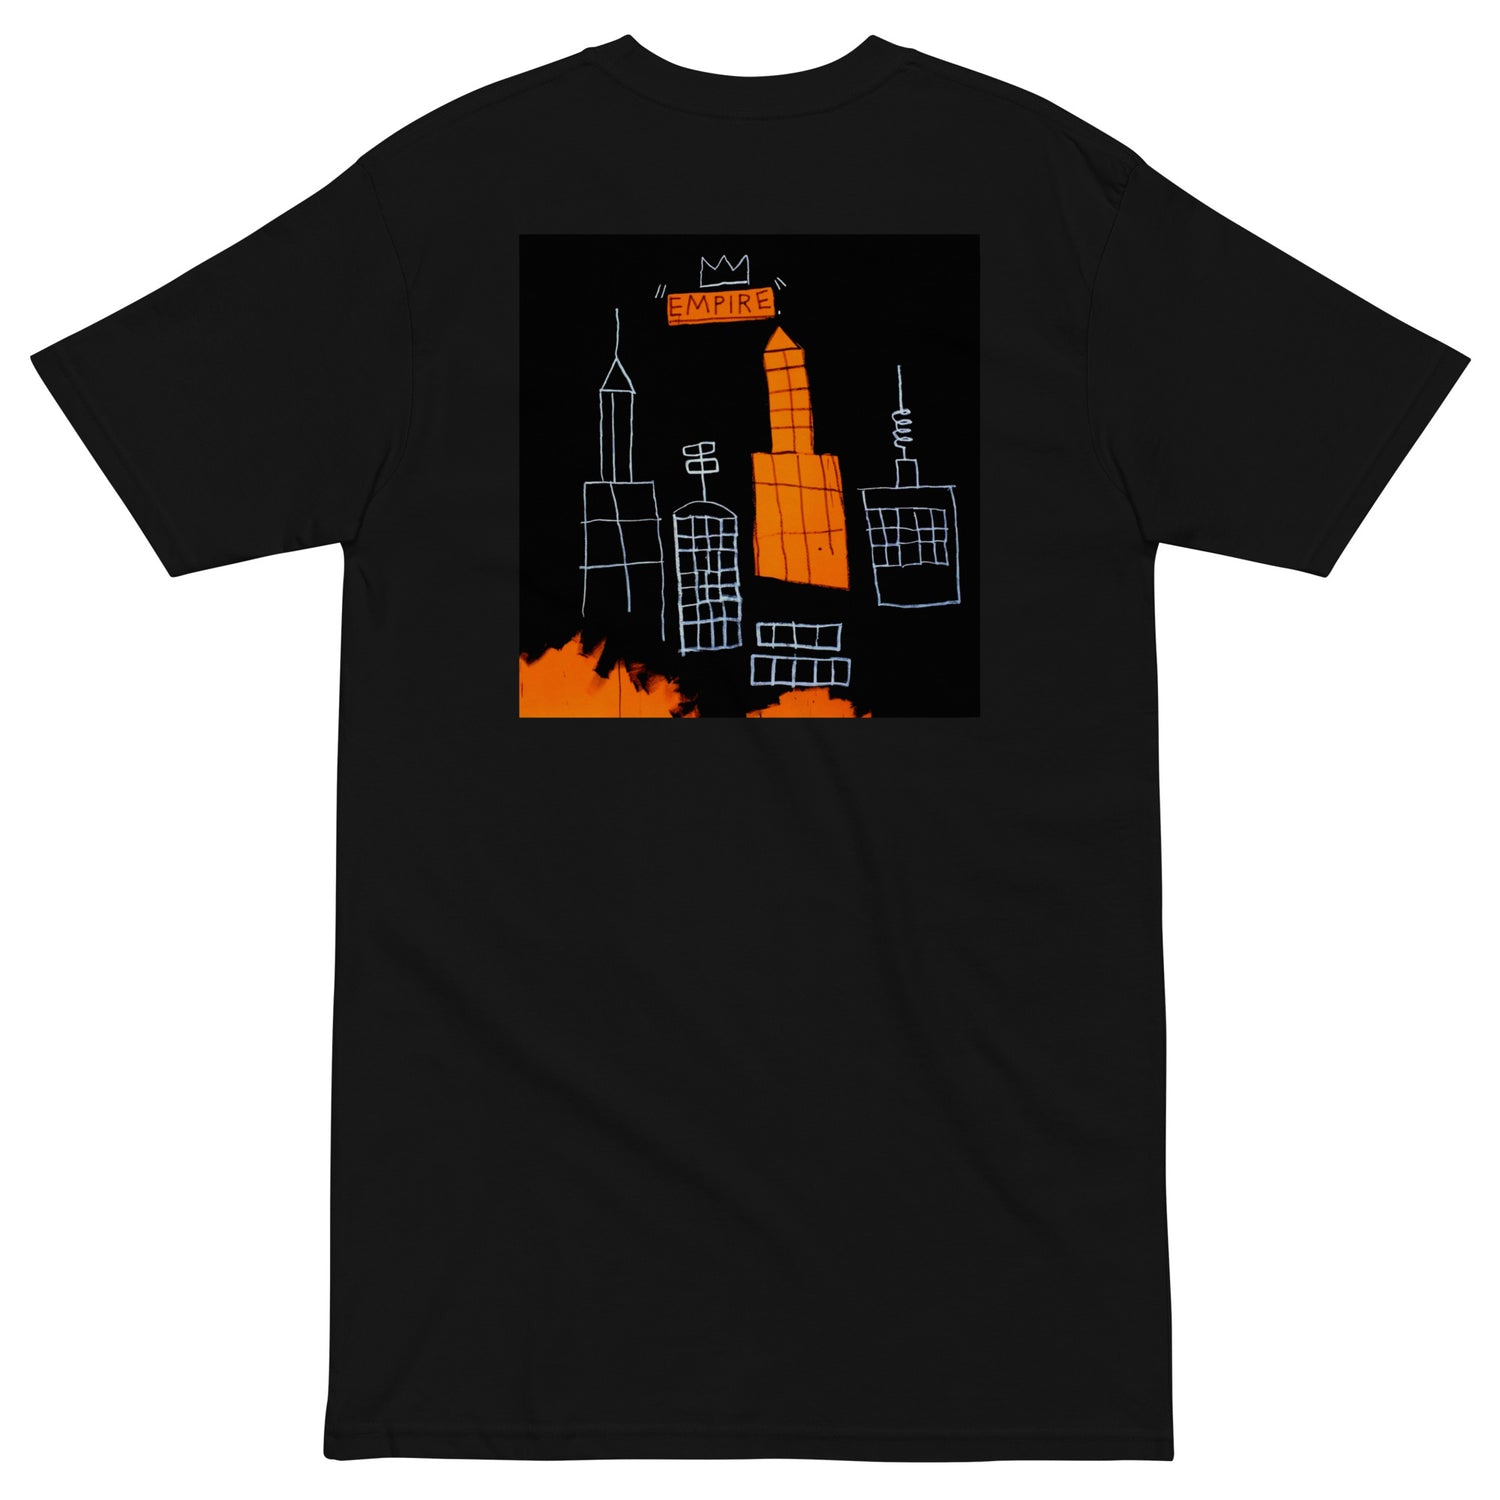 Jean-Michel Basquiat "Mecca" 1982 Artwork Embroidered + Printed Premium Streetwear T-shirt Black